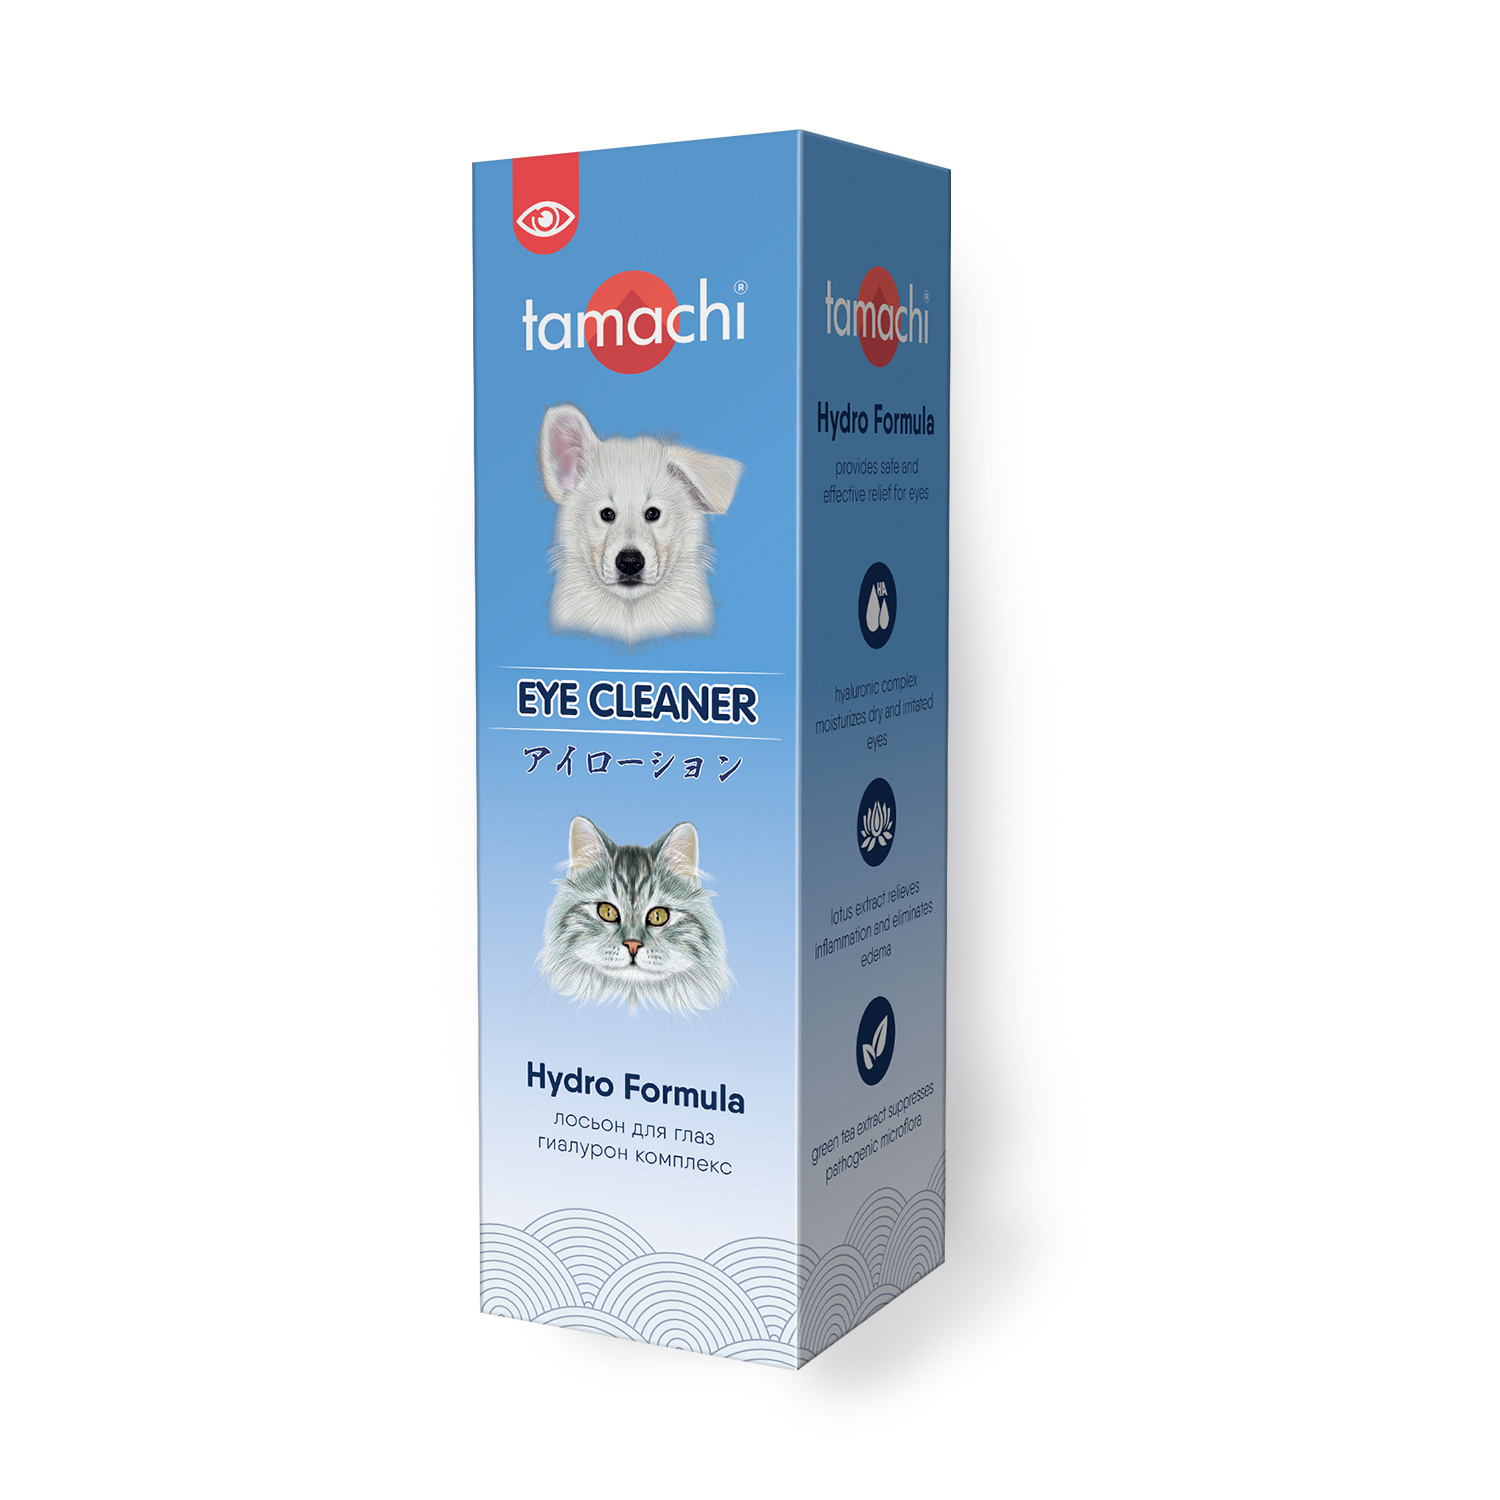 Tamachi Tamachi лосьон для глаз, 110 мл (140 г)